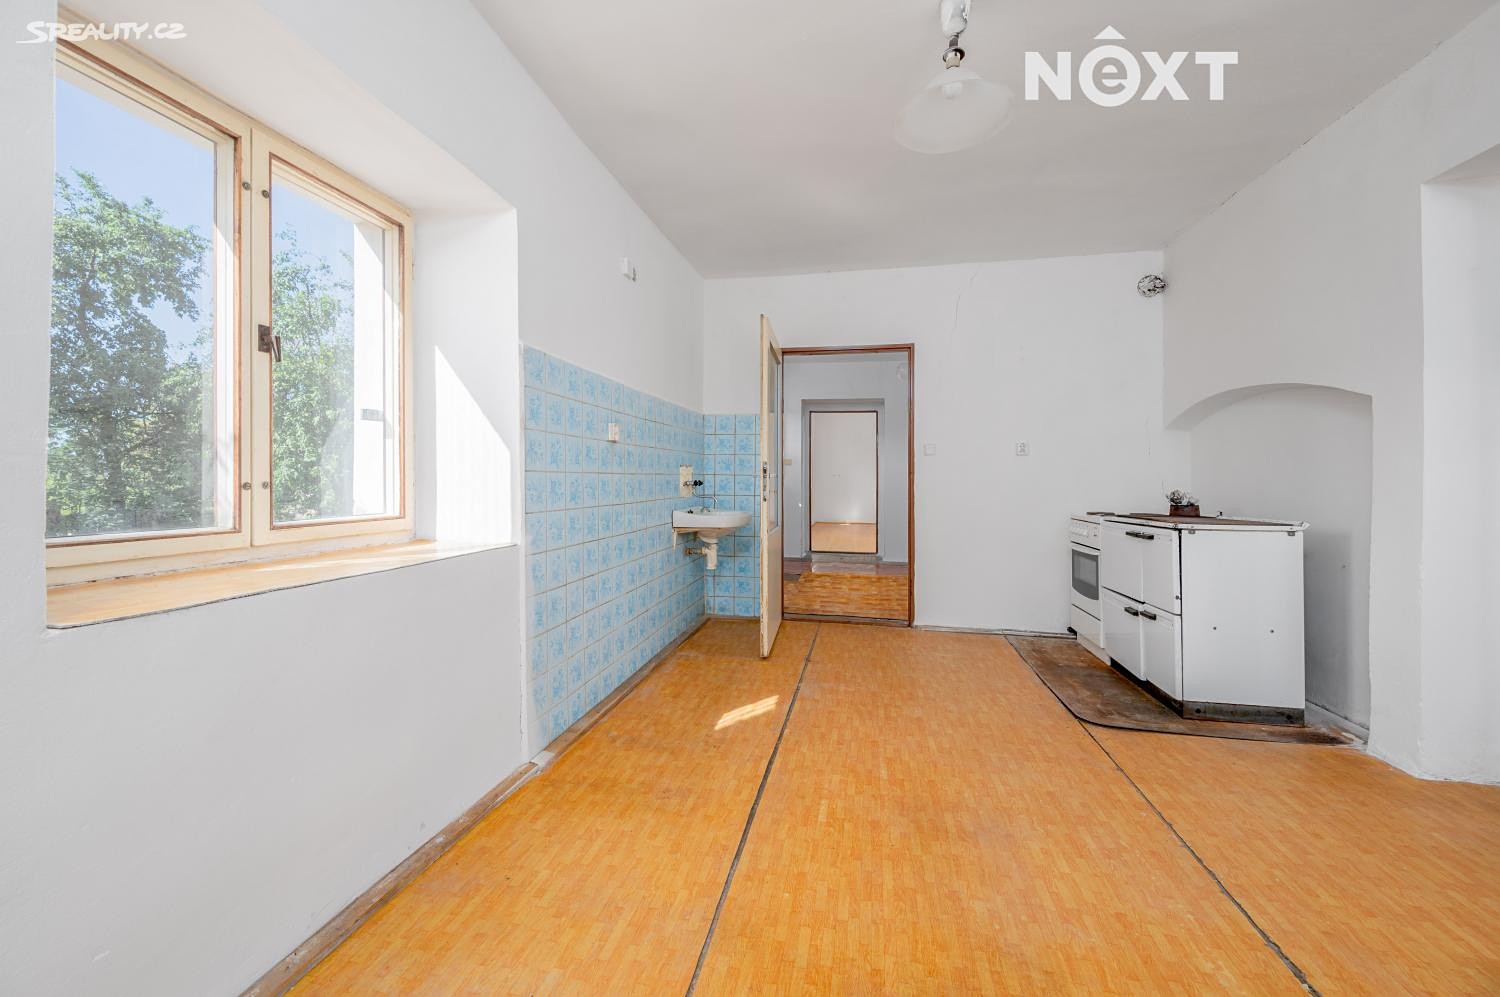 Prodej  rodinného domu 150 m², pozemek 2 090 m², Štědrá, okres Karlovy Vary